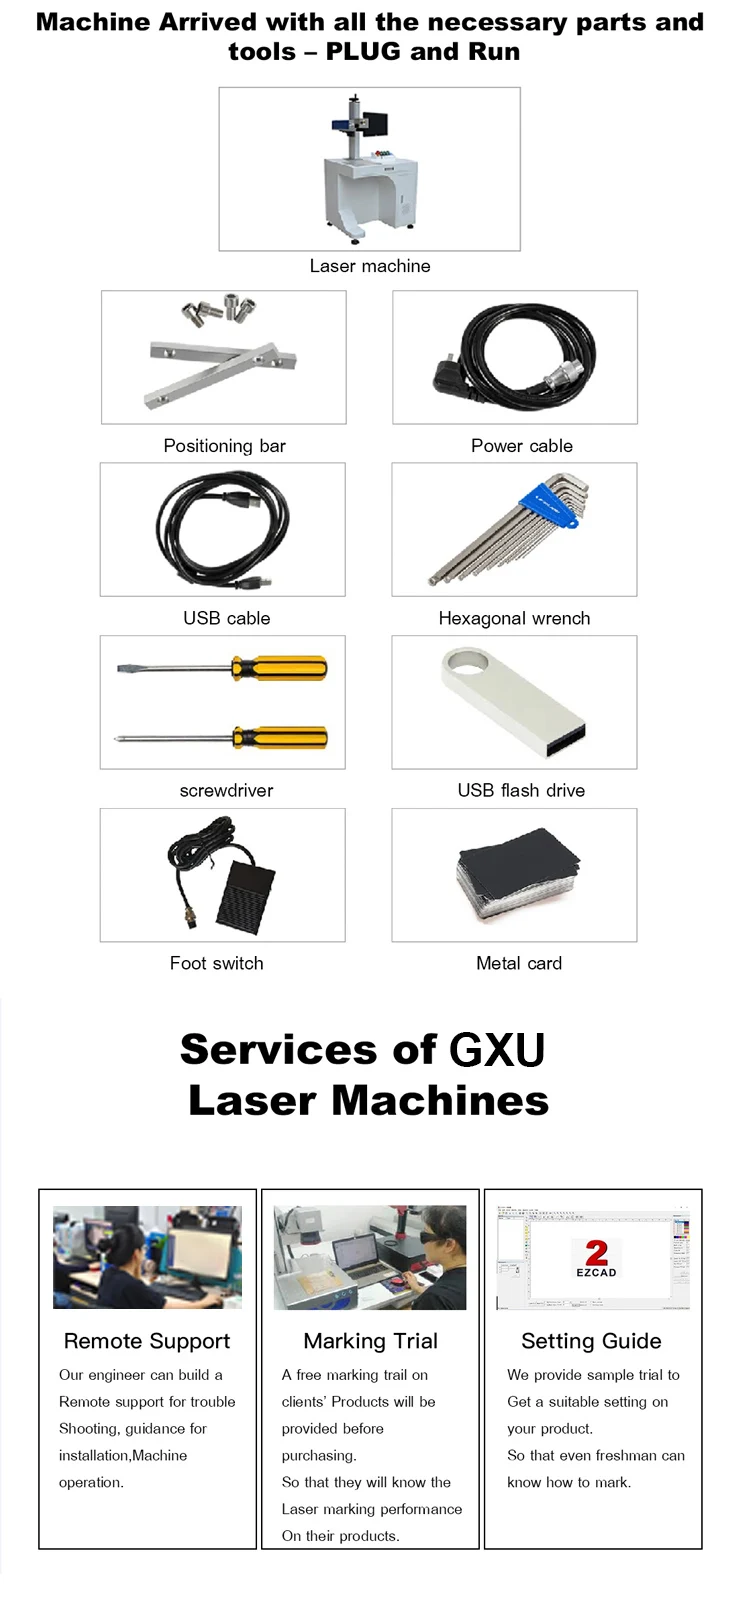 Raycus / JPT / IPG Air-cooled Laser Label Marking Machine Fiber 20W Laser Marking Machine